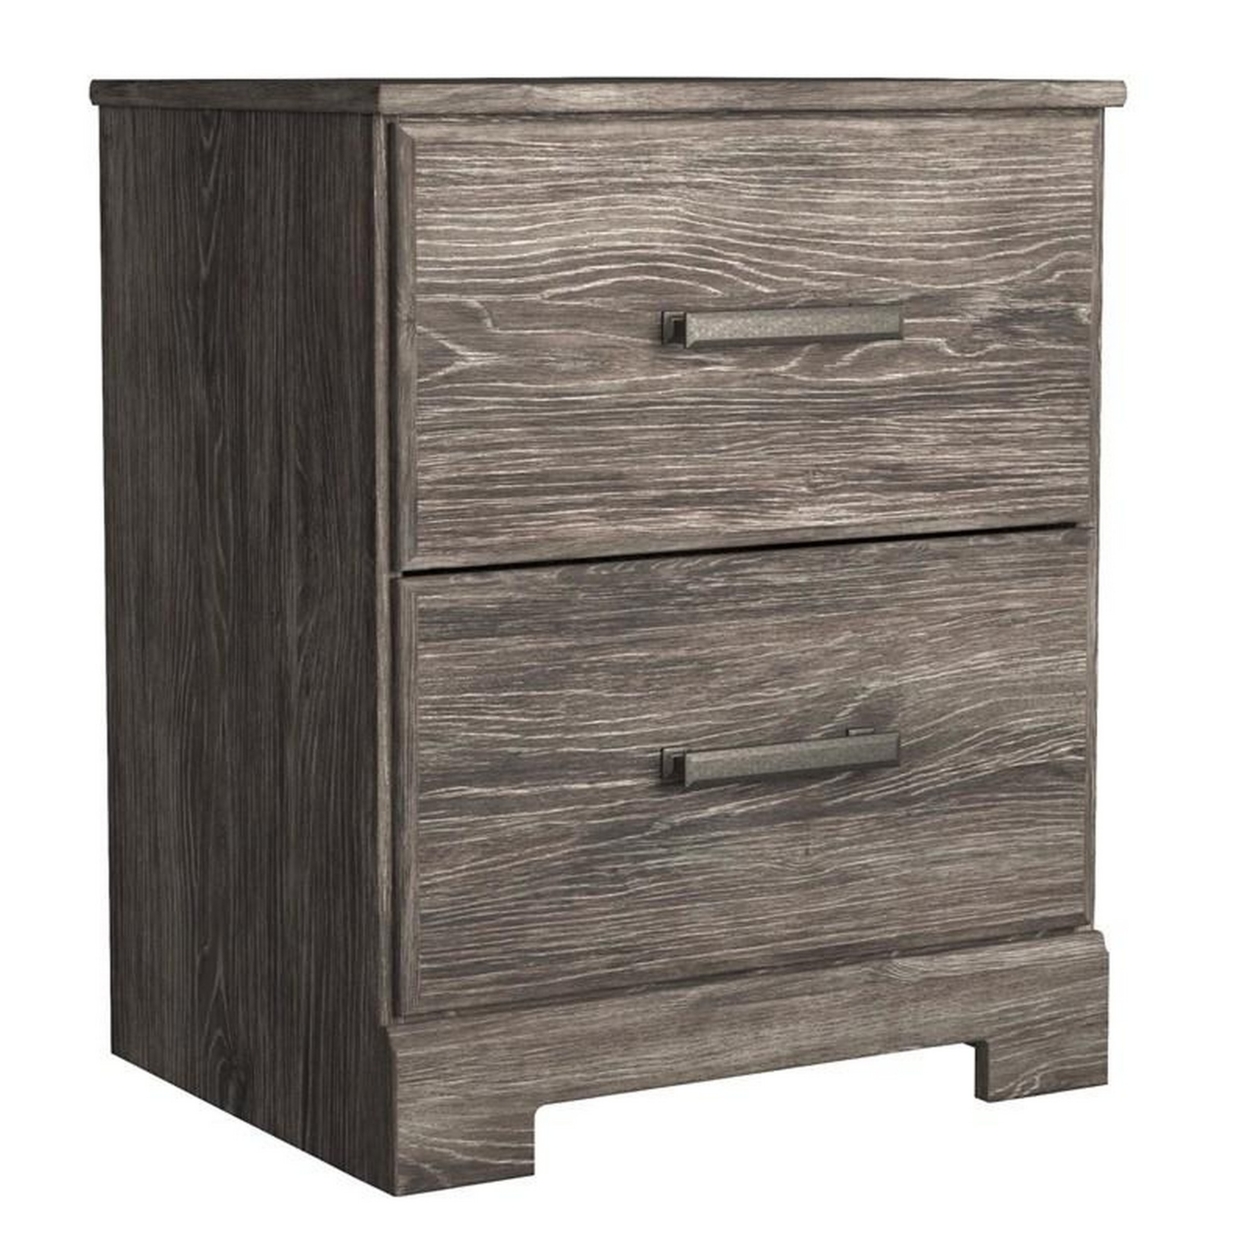 Lin 24 Inch Rustic Wood Nightstand, 2 Drawers, Gray Oak Grain Details- Saltoro Sherpi